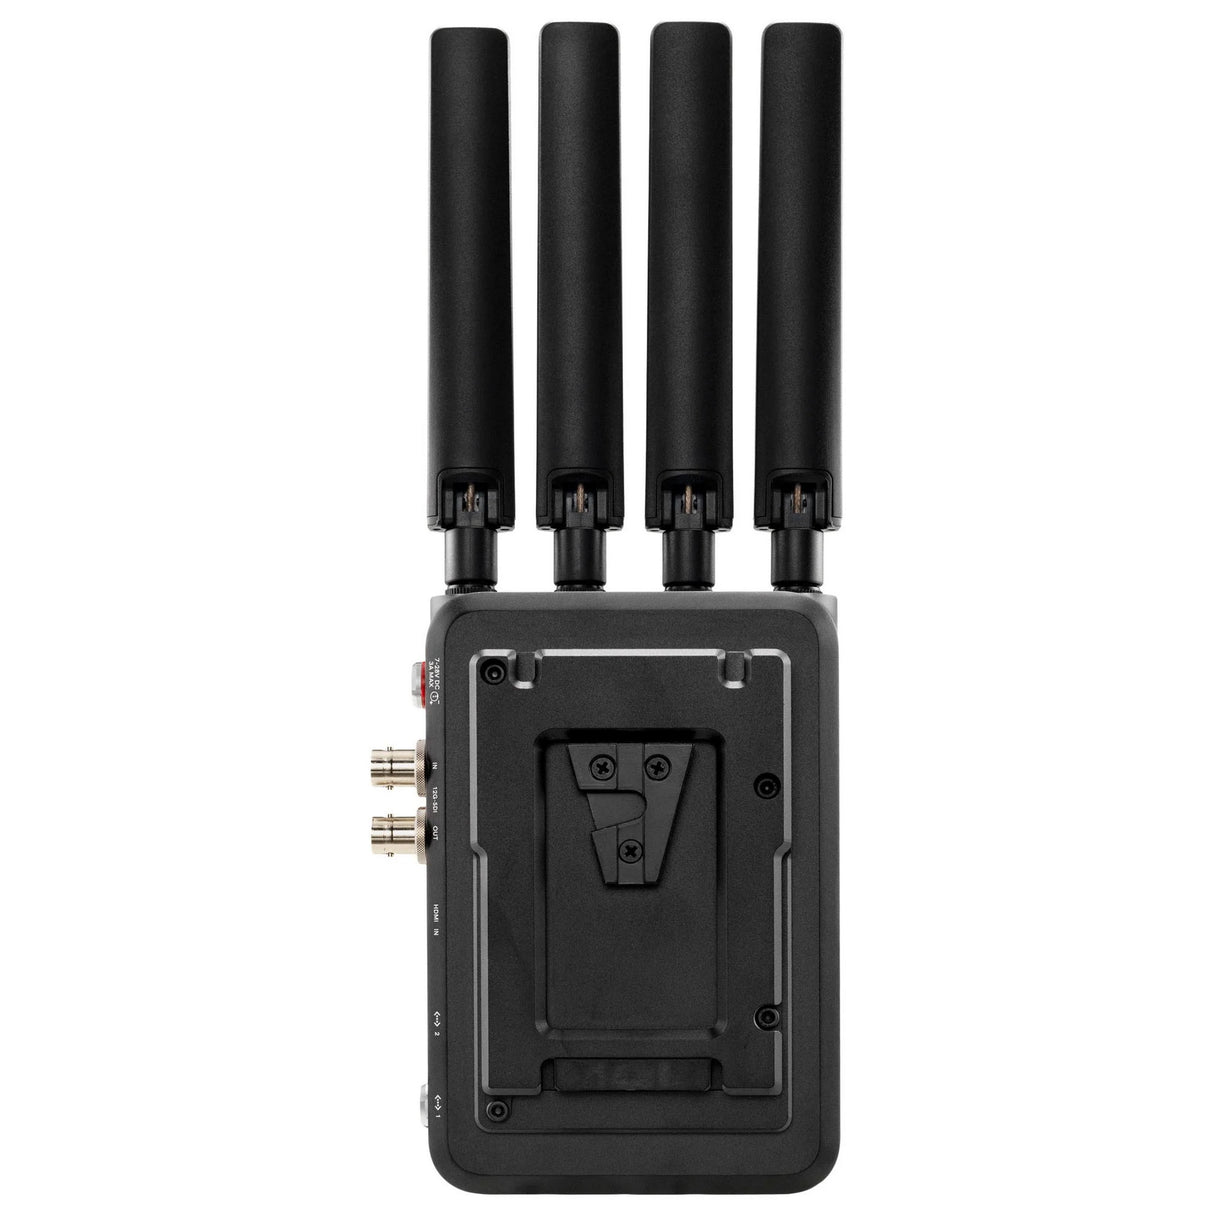 Teradek Prism Mobile 857 HEVC/AVC with Dual 4G LTE, V-Mount